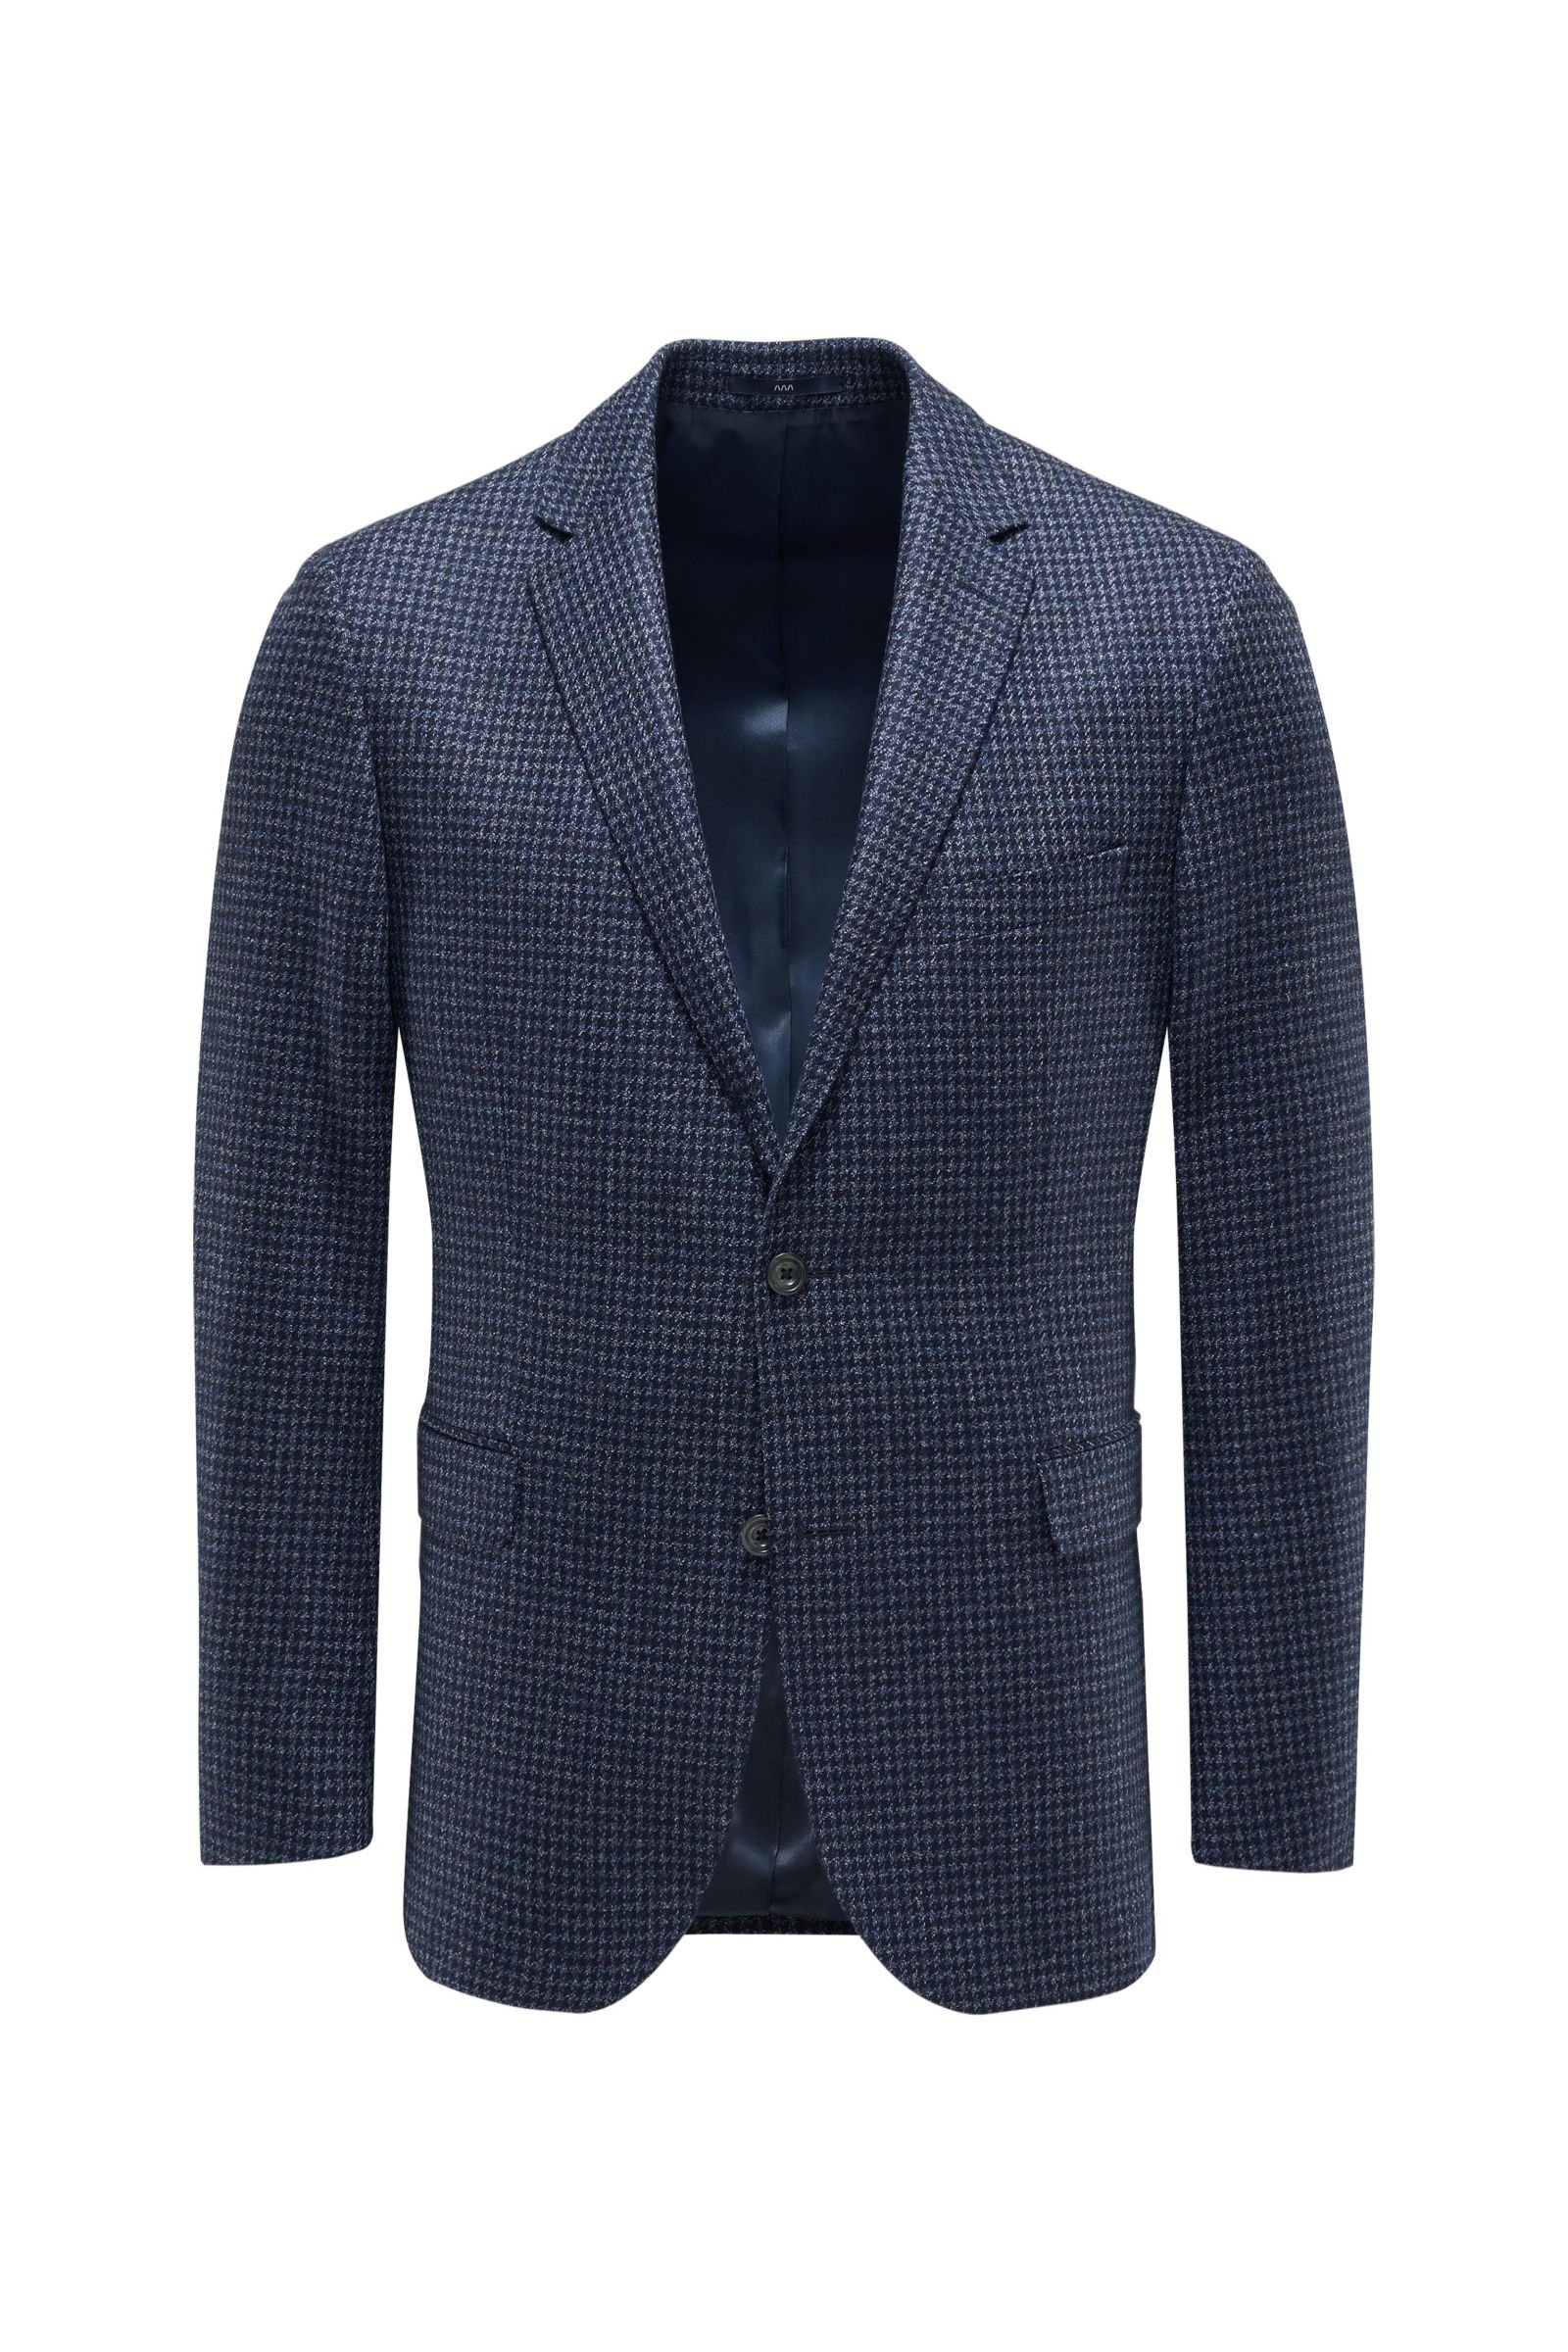 Smart-casual jacket 'Sean' navy/grey-blue checked